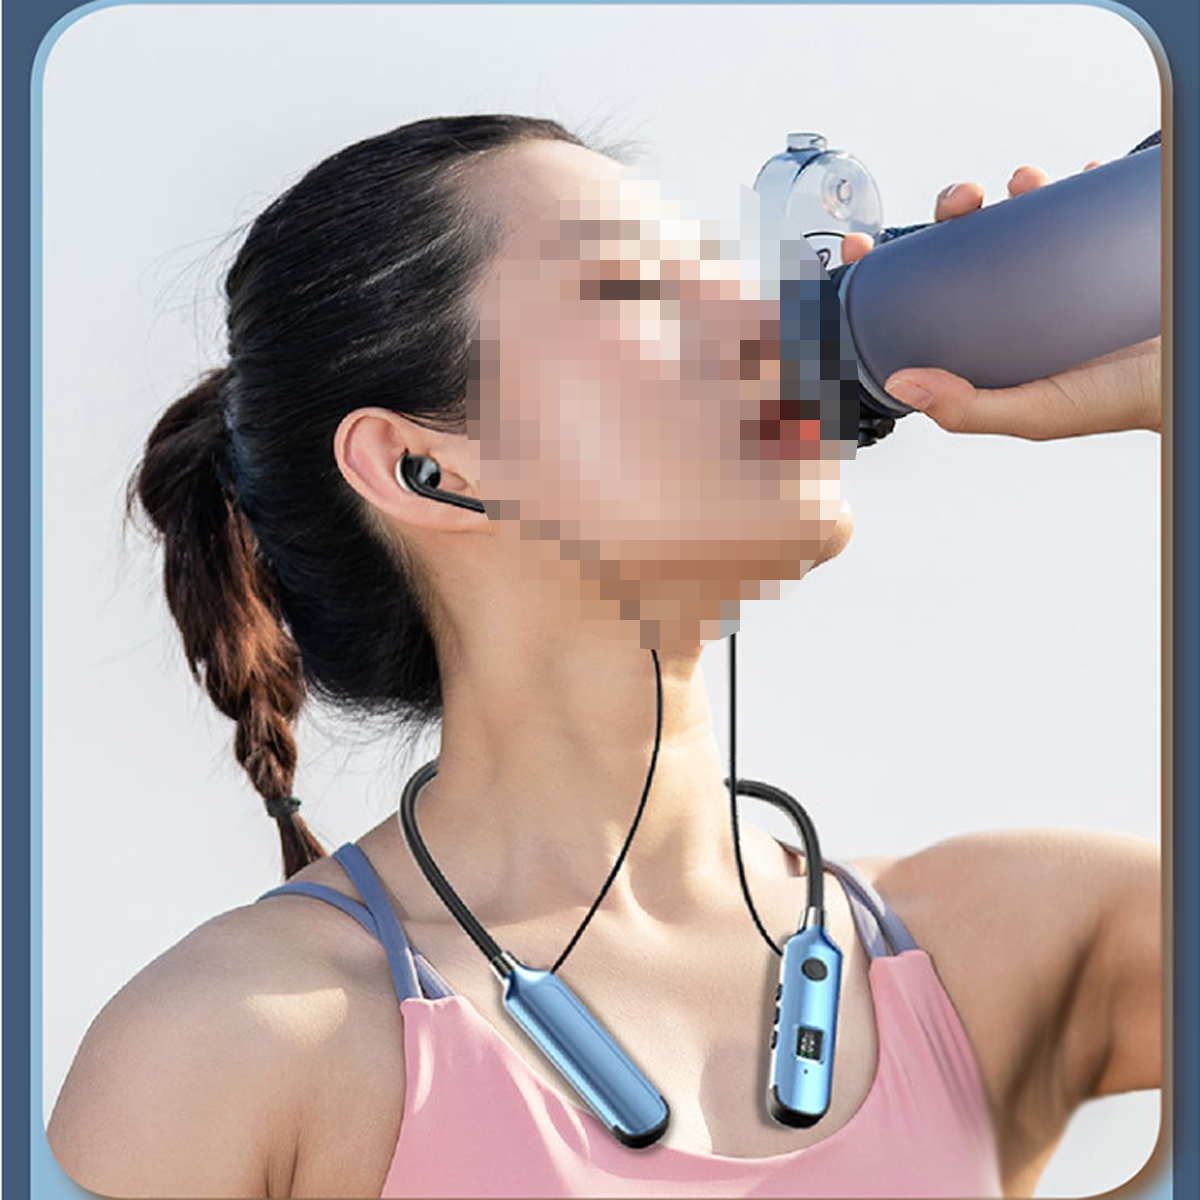 ENBAOXIN drahtlose Headset Headset In-ear Bluetooth Blau drahtlose Kopfhörer mit Soundkarte, - Drahtloses Fernbedienung,